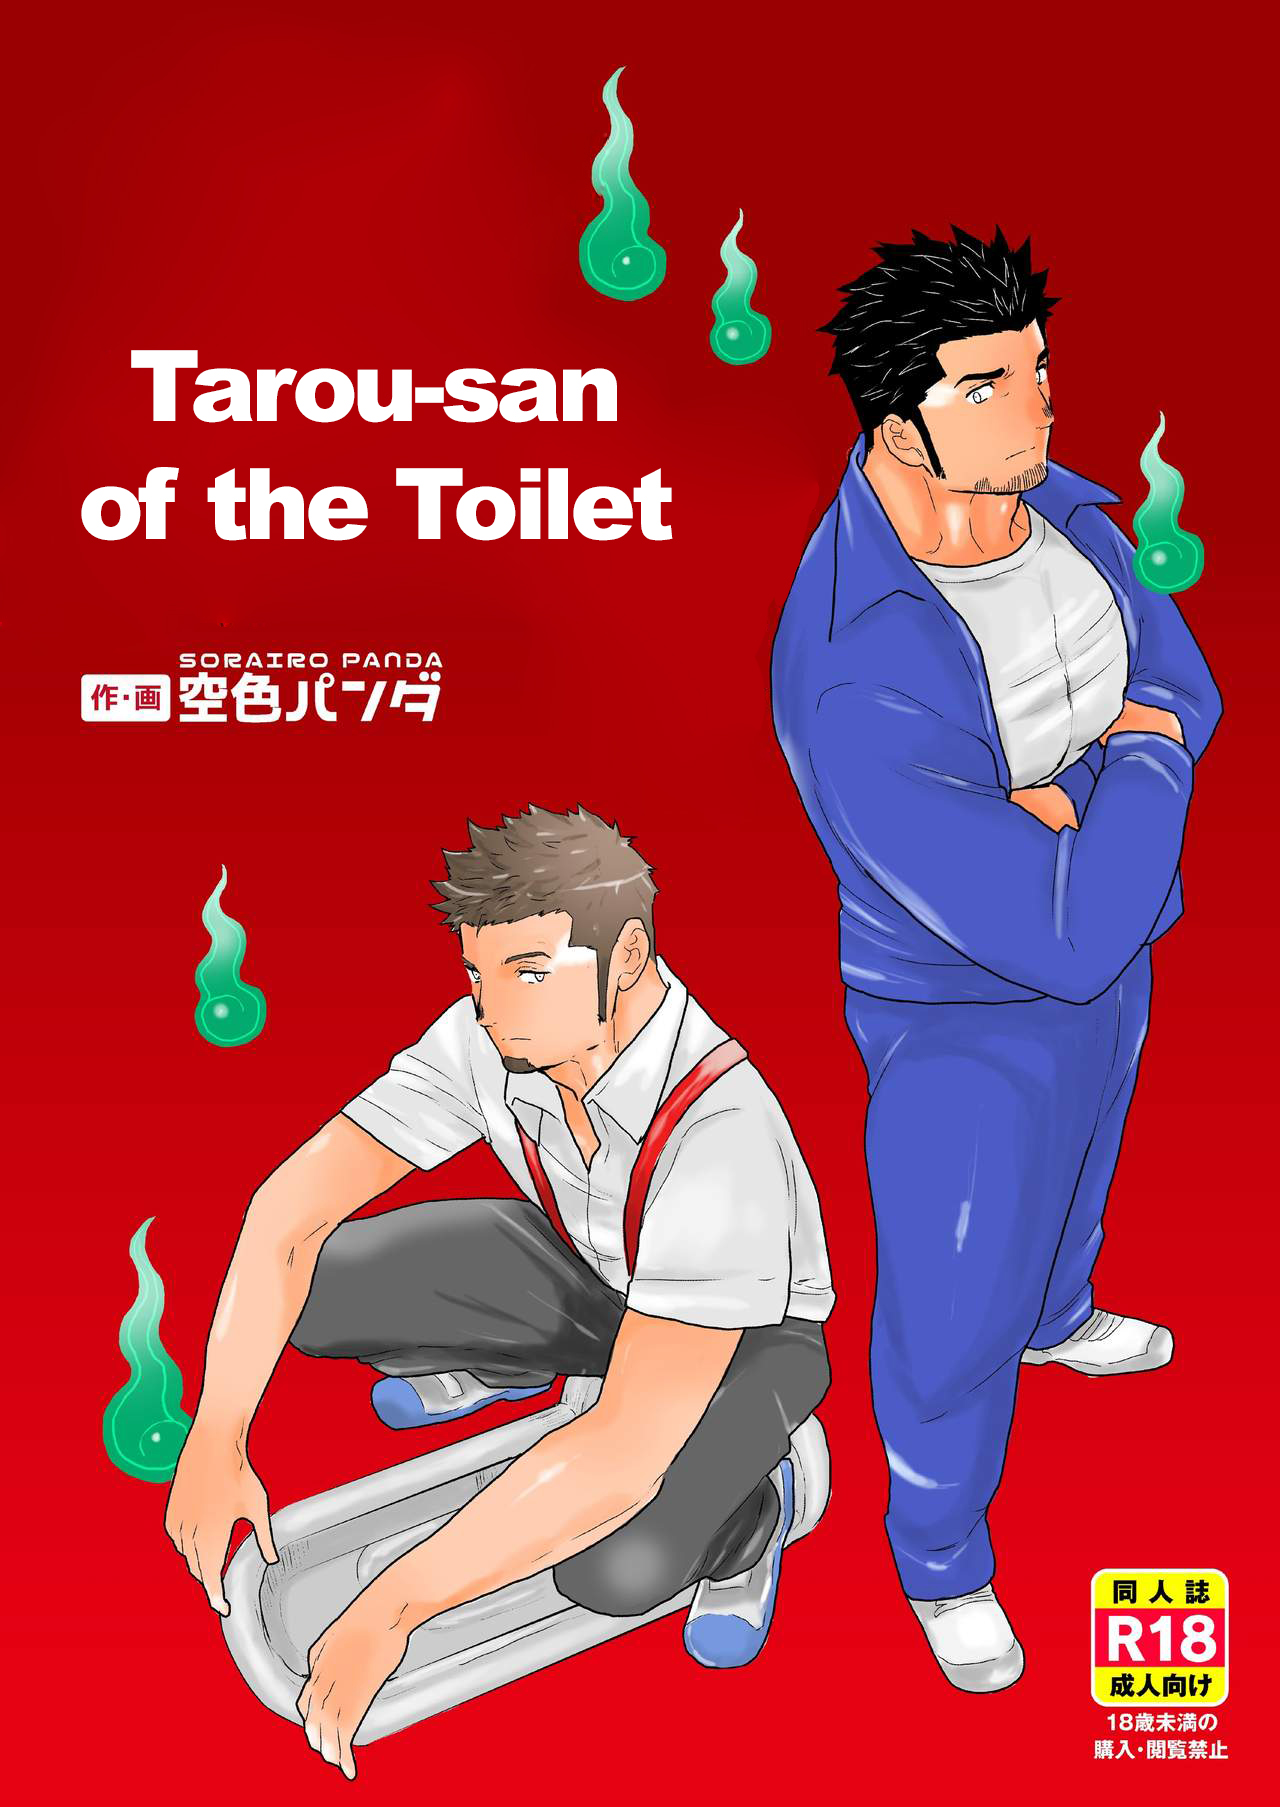 Yamome ヤモメ Sorairo Panda 空色パソダ Tarou-san of the Toilet